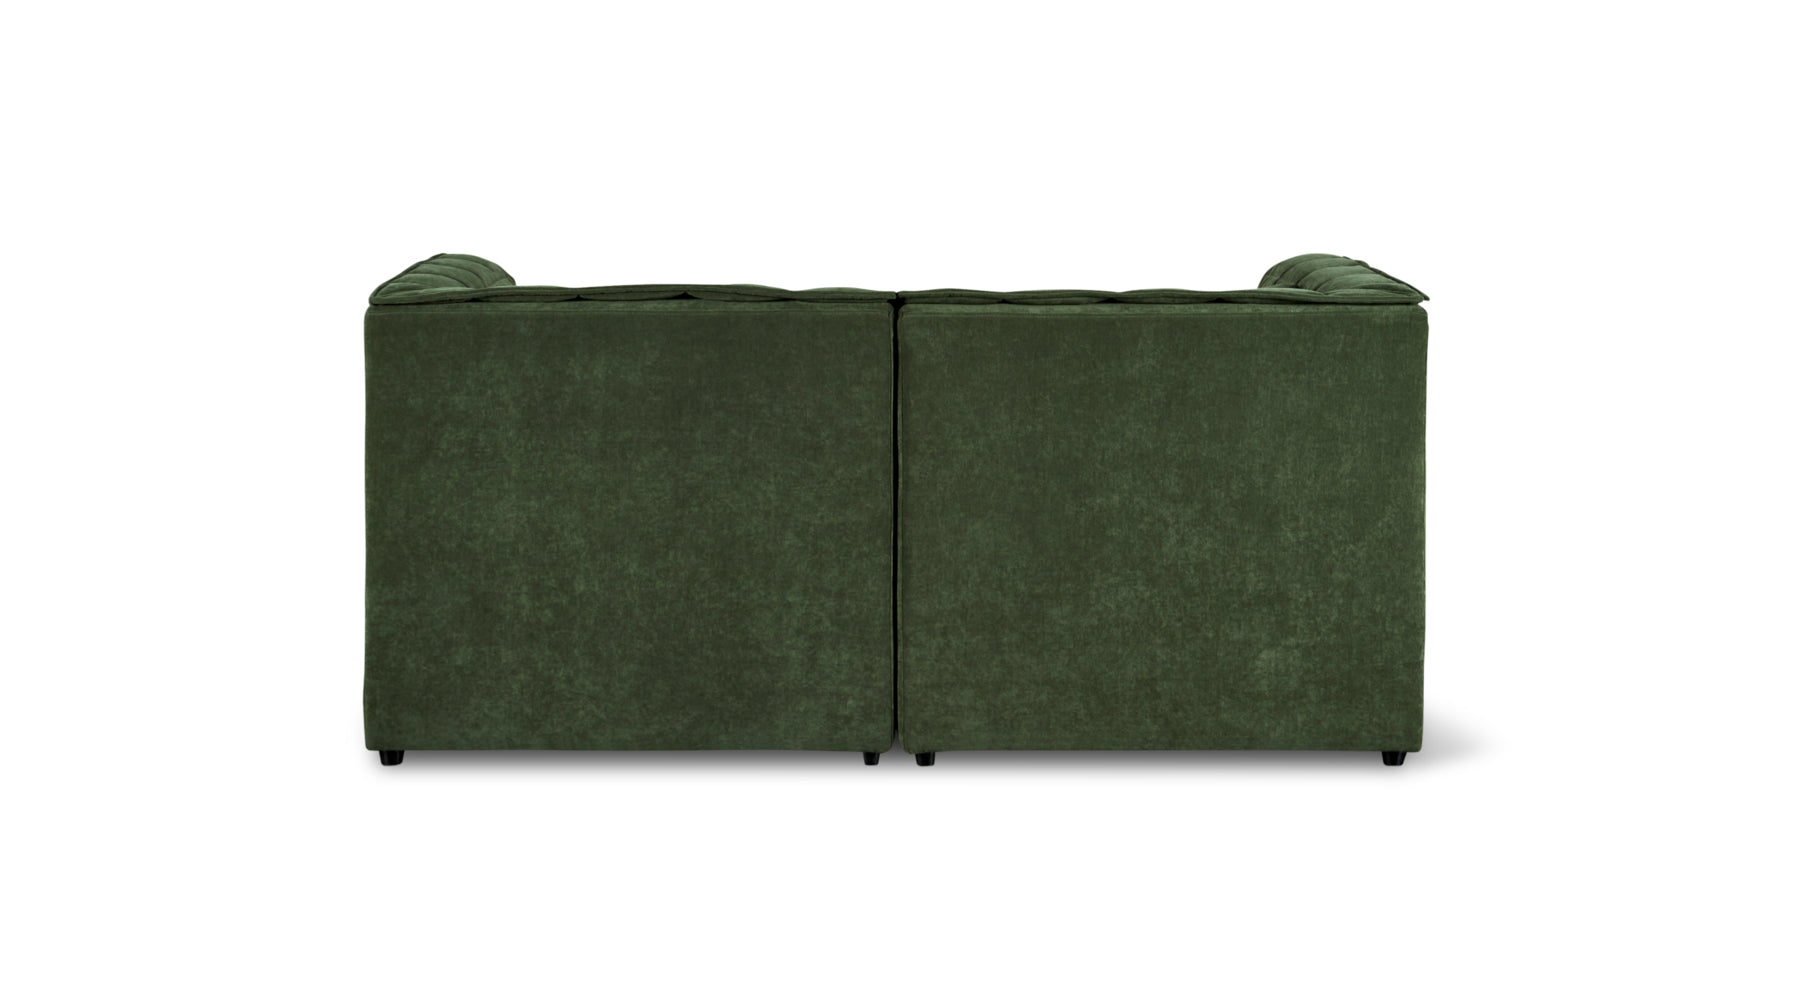 Quilt 2-Piece Modular Sofa, Moss - Image 4